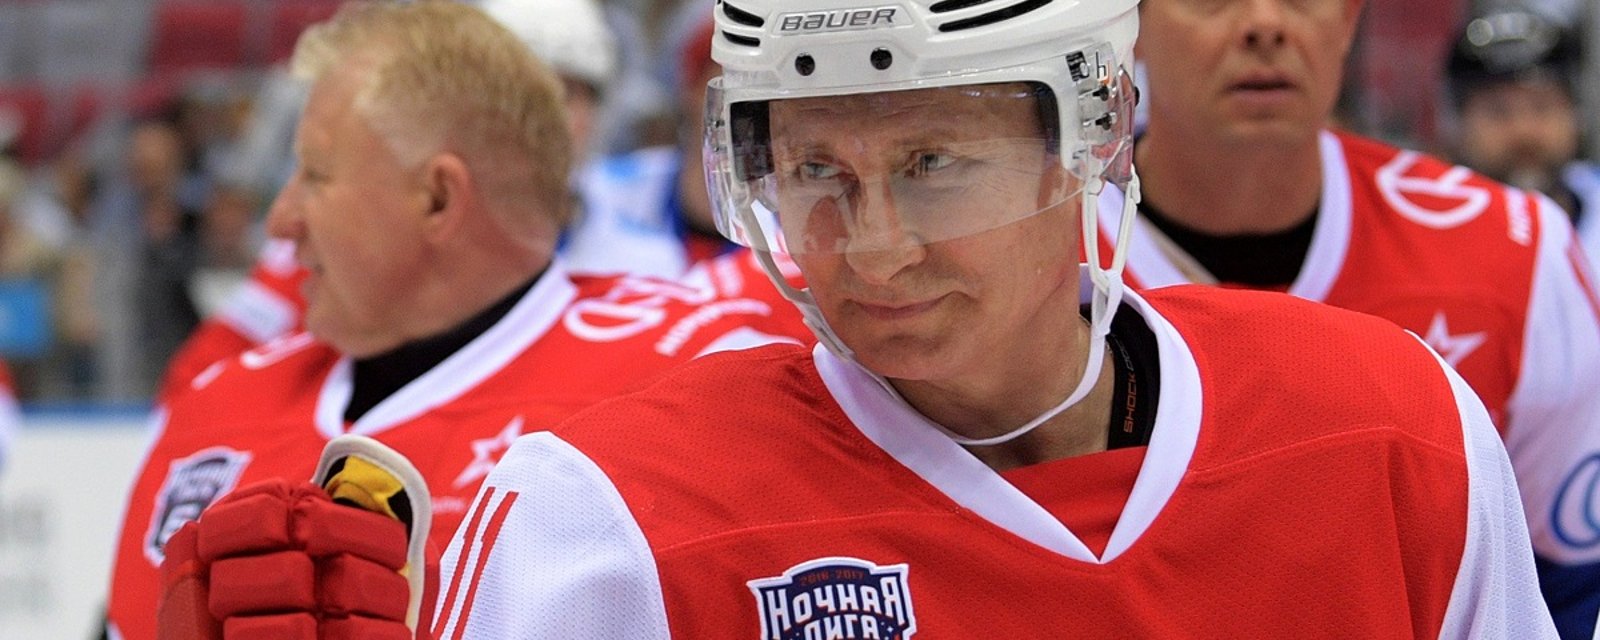 Vladimir Putin is so good at hockey it's embarrassing. 